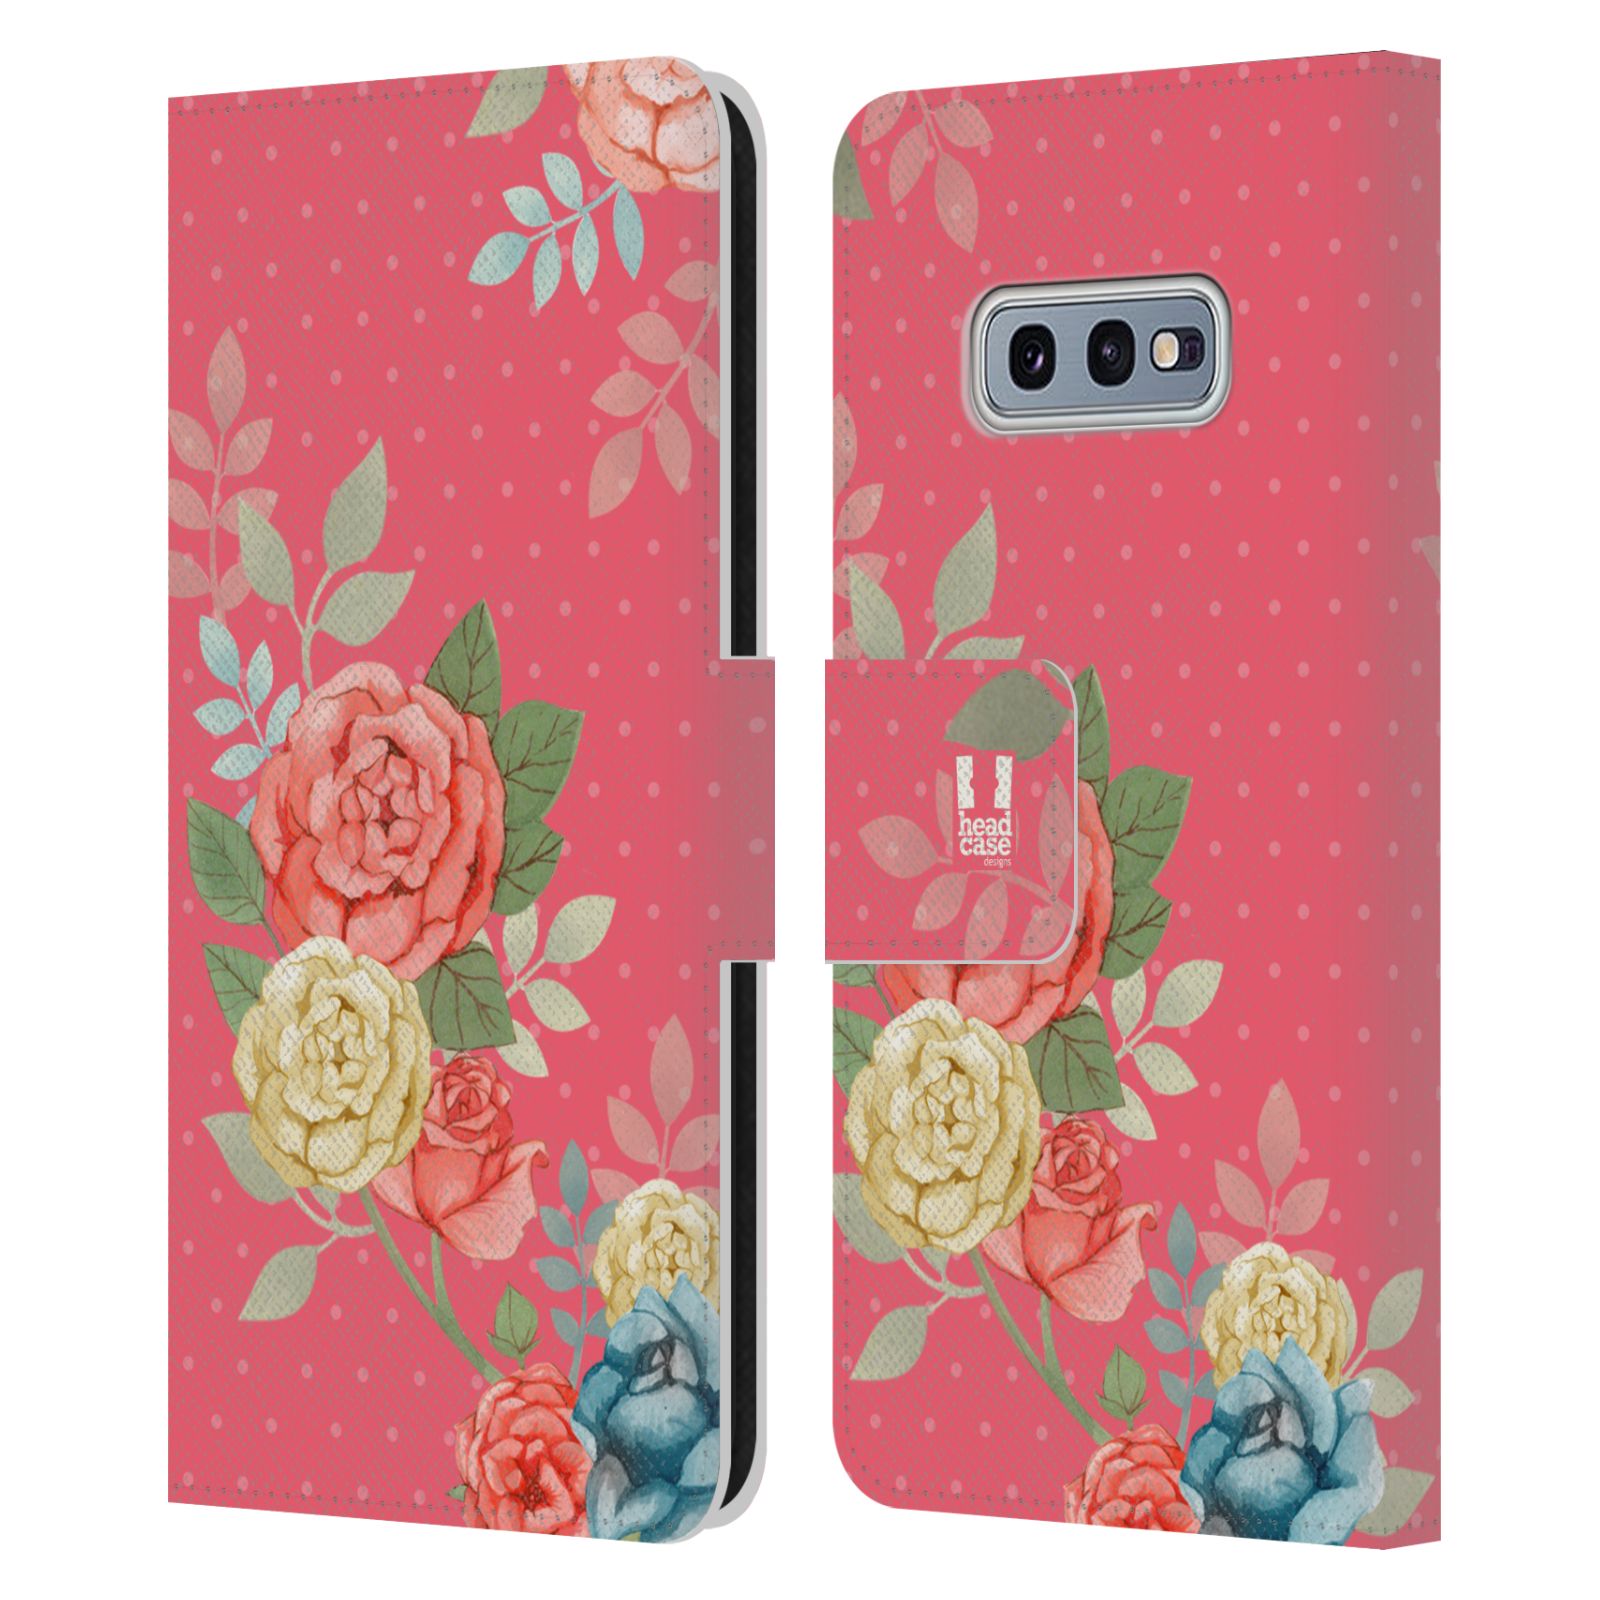 Pouzdro HEAD CASE na mobil Samsung Galaxy S10e romantické květy růžová